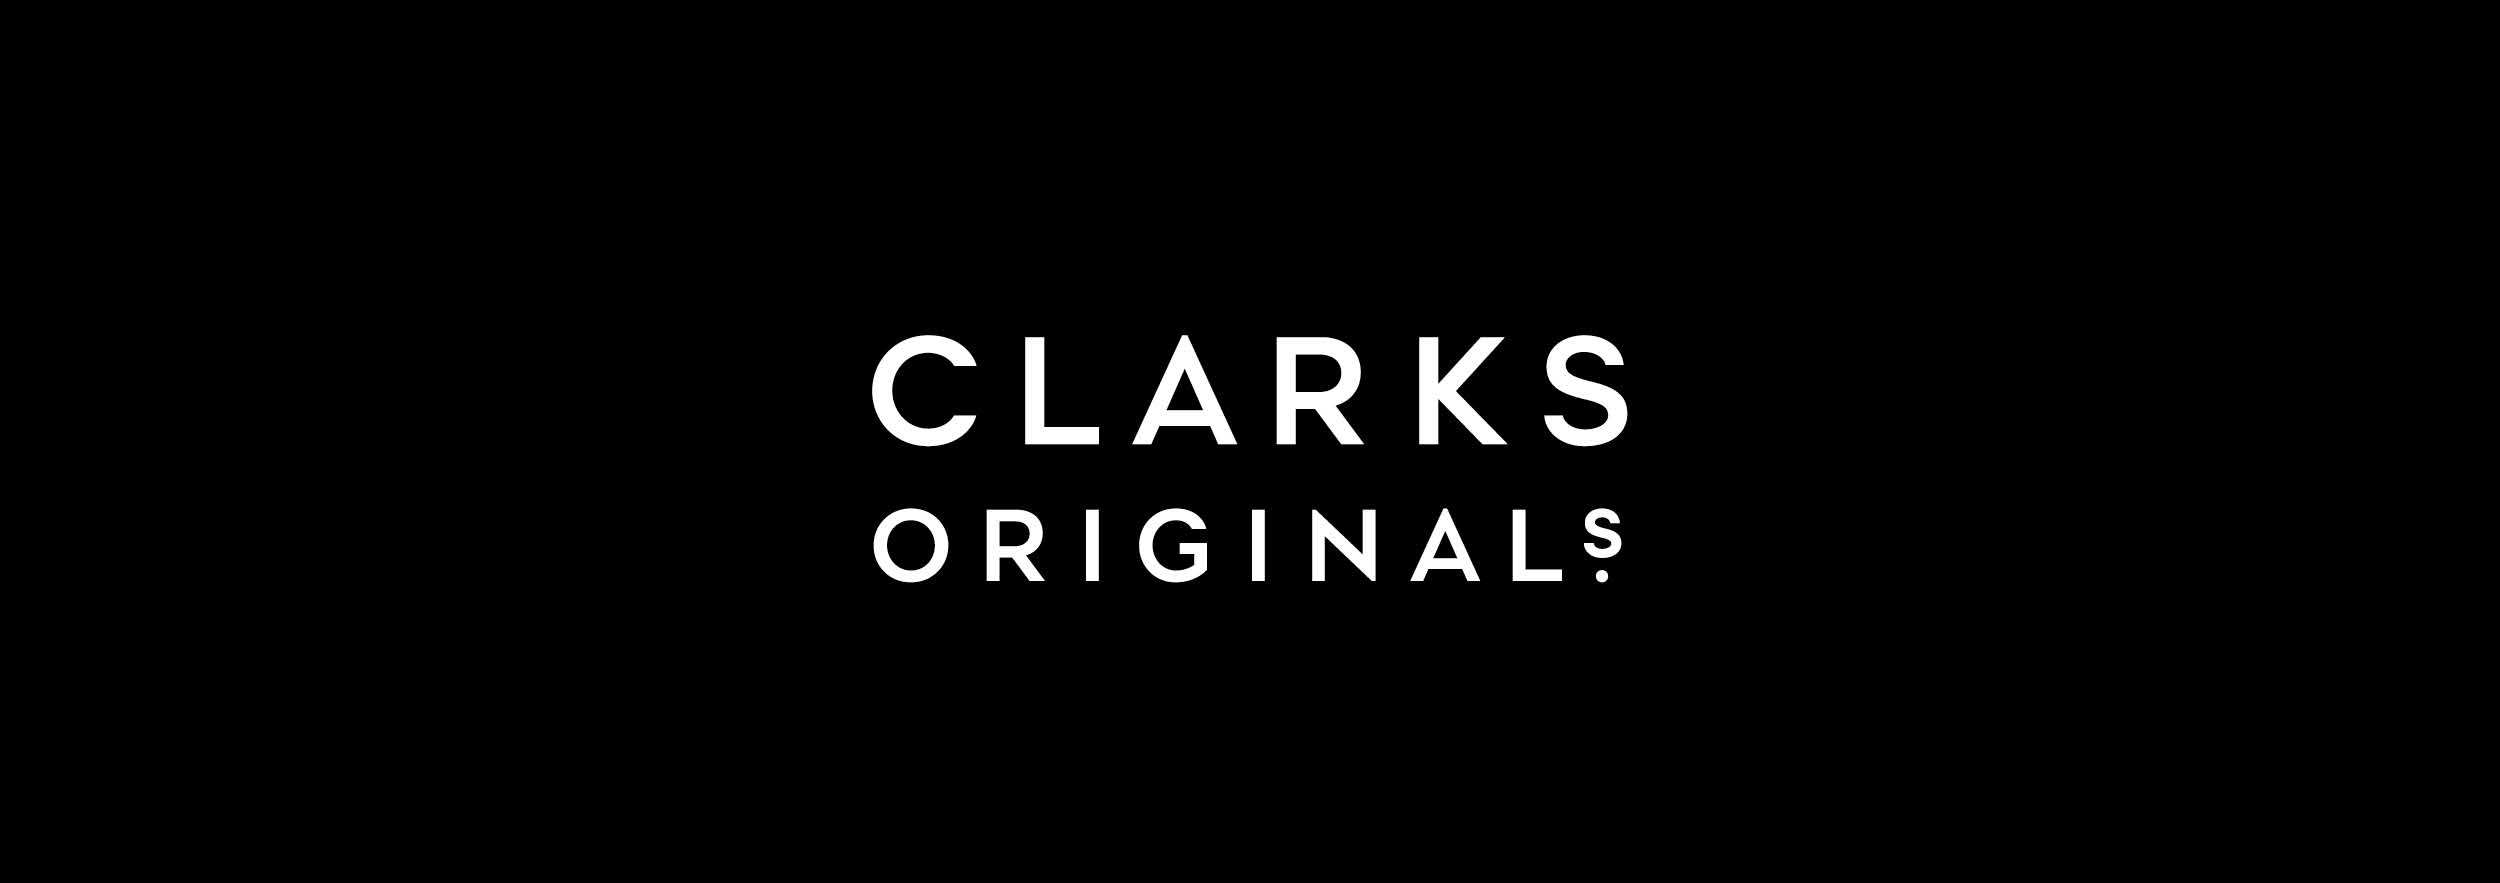 clarks originals donna